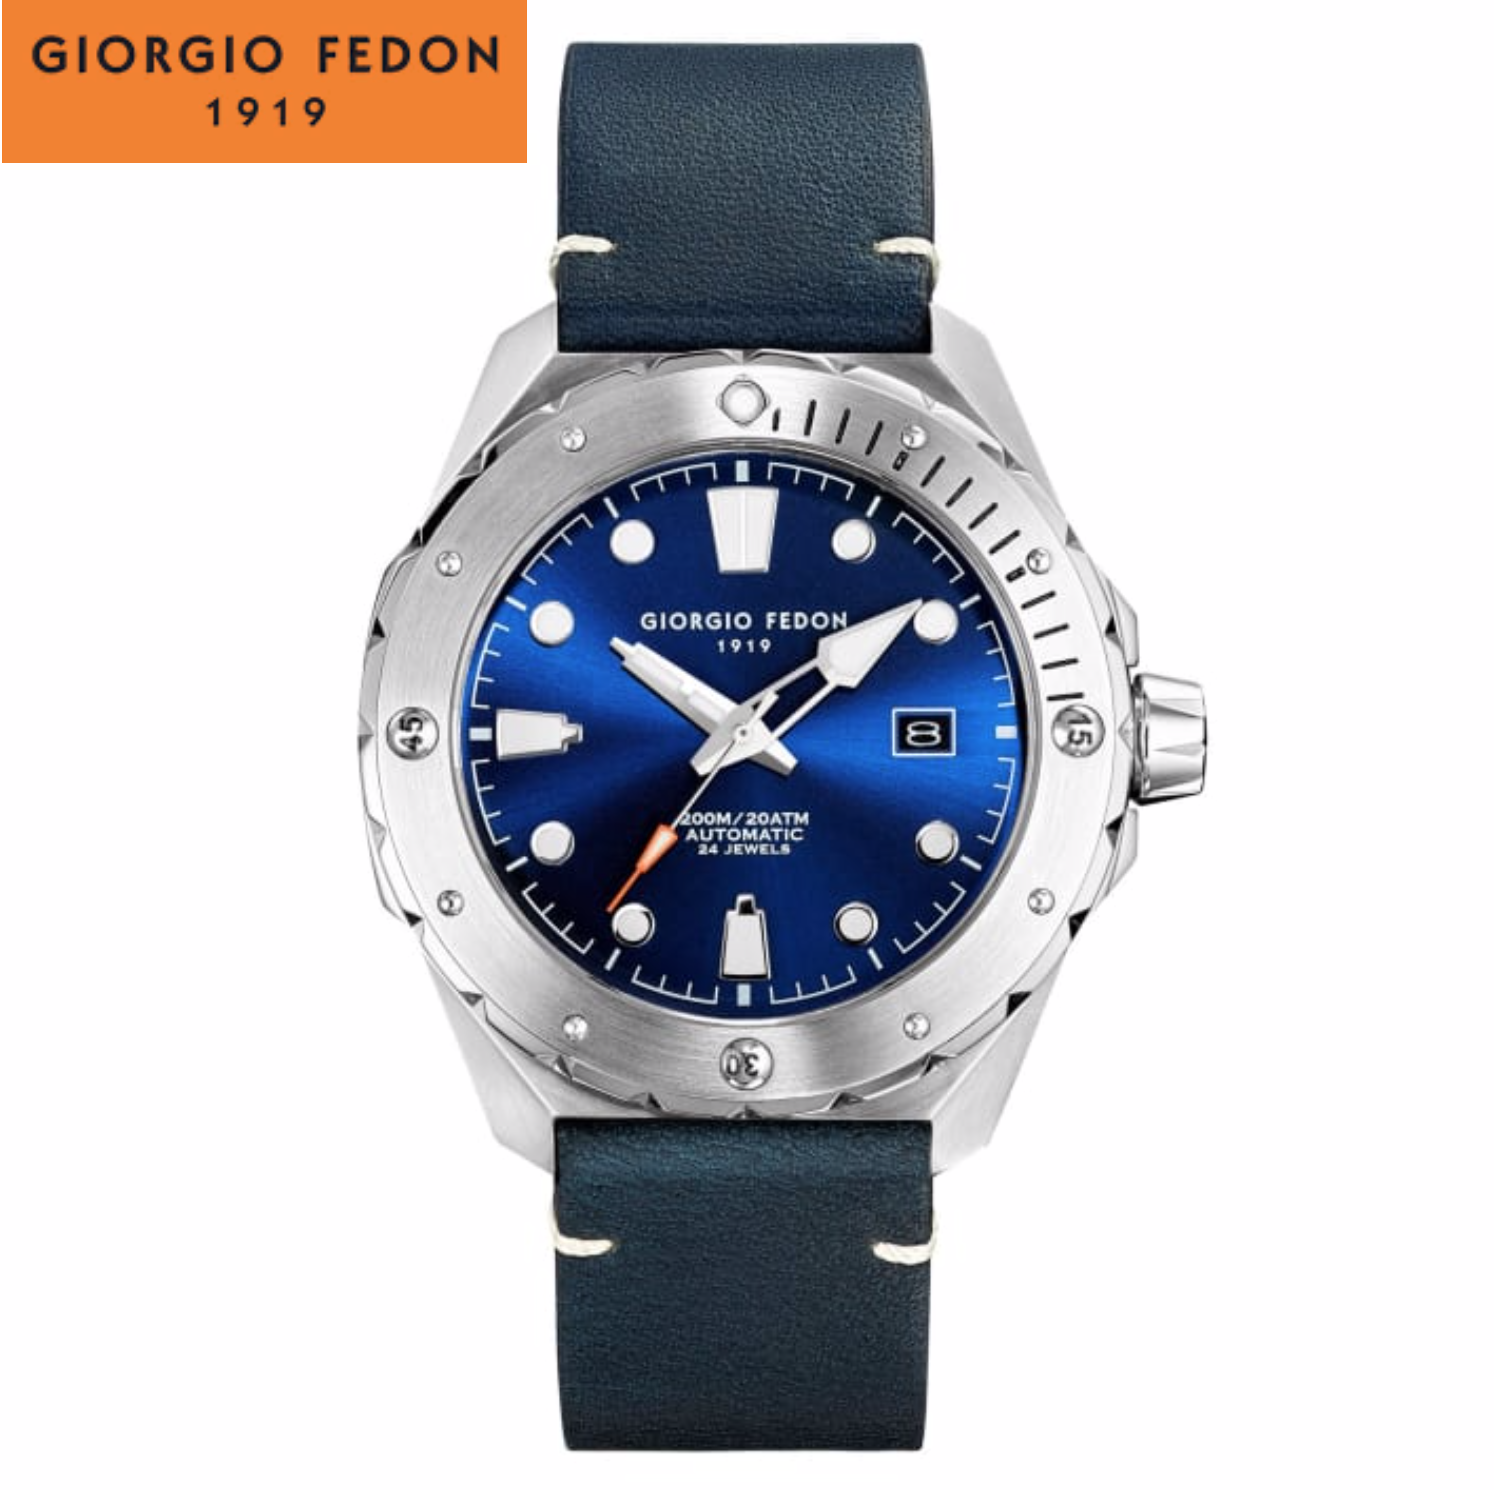 Giorgio Fedon 喬治菲登1919 Ocean Walker 海行者系列 機械腕錶 GFCJ003 藍/45mm